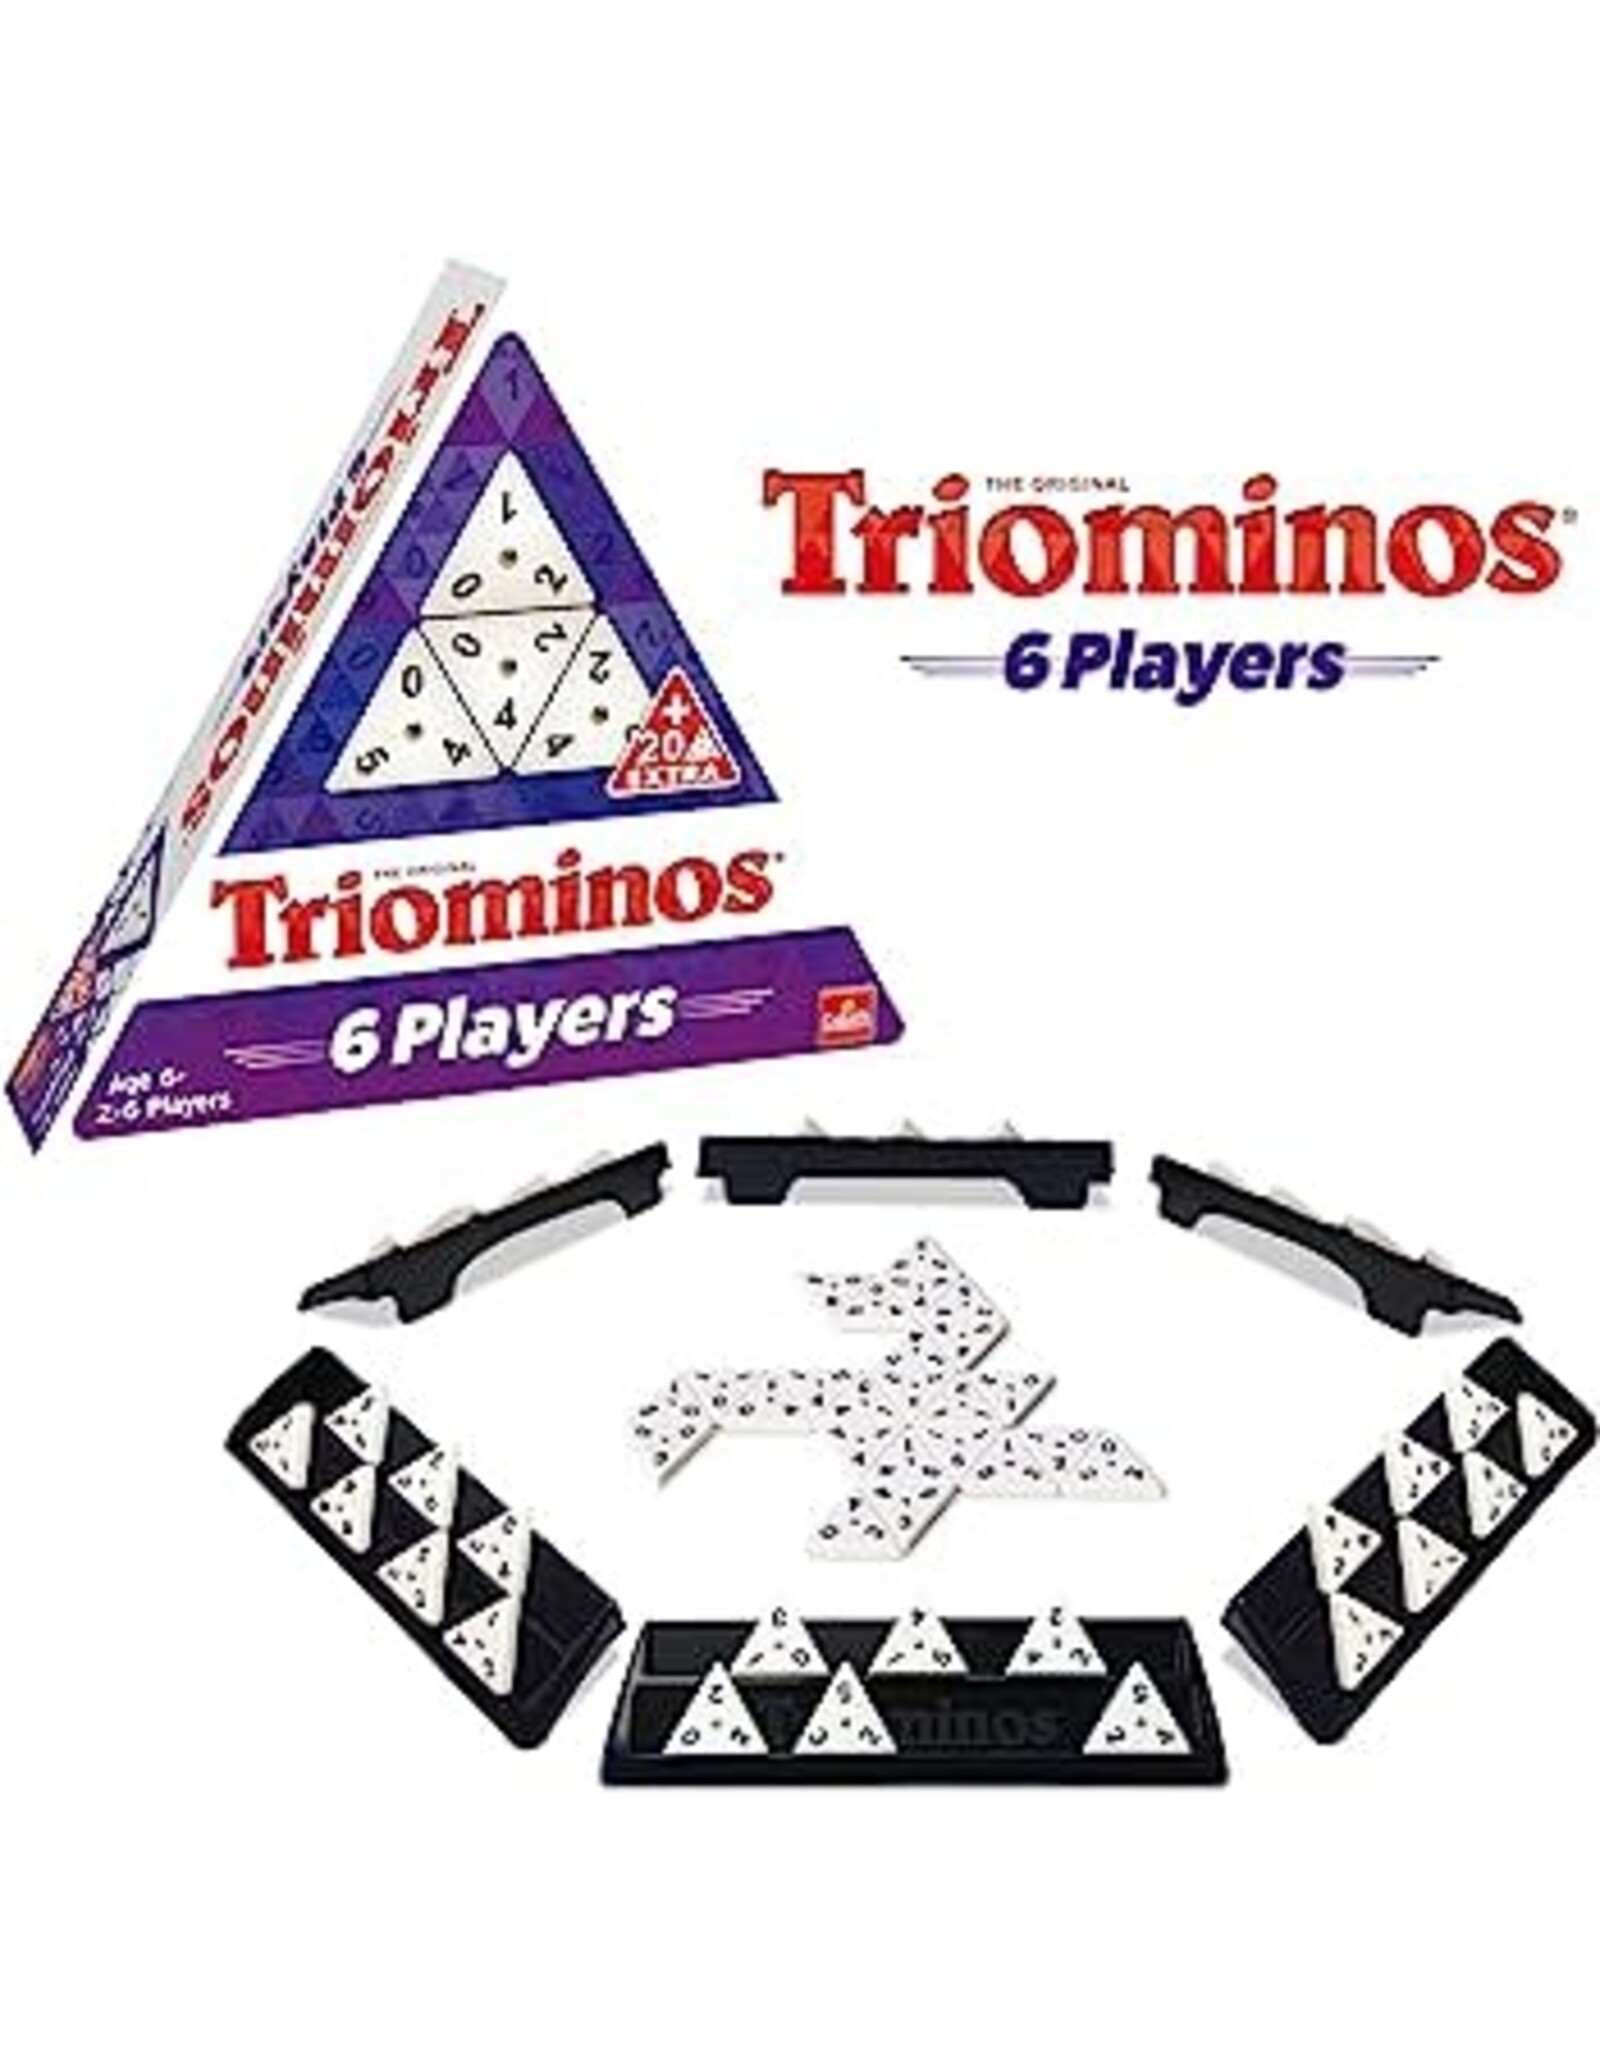 Goliath Triominos 6 players